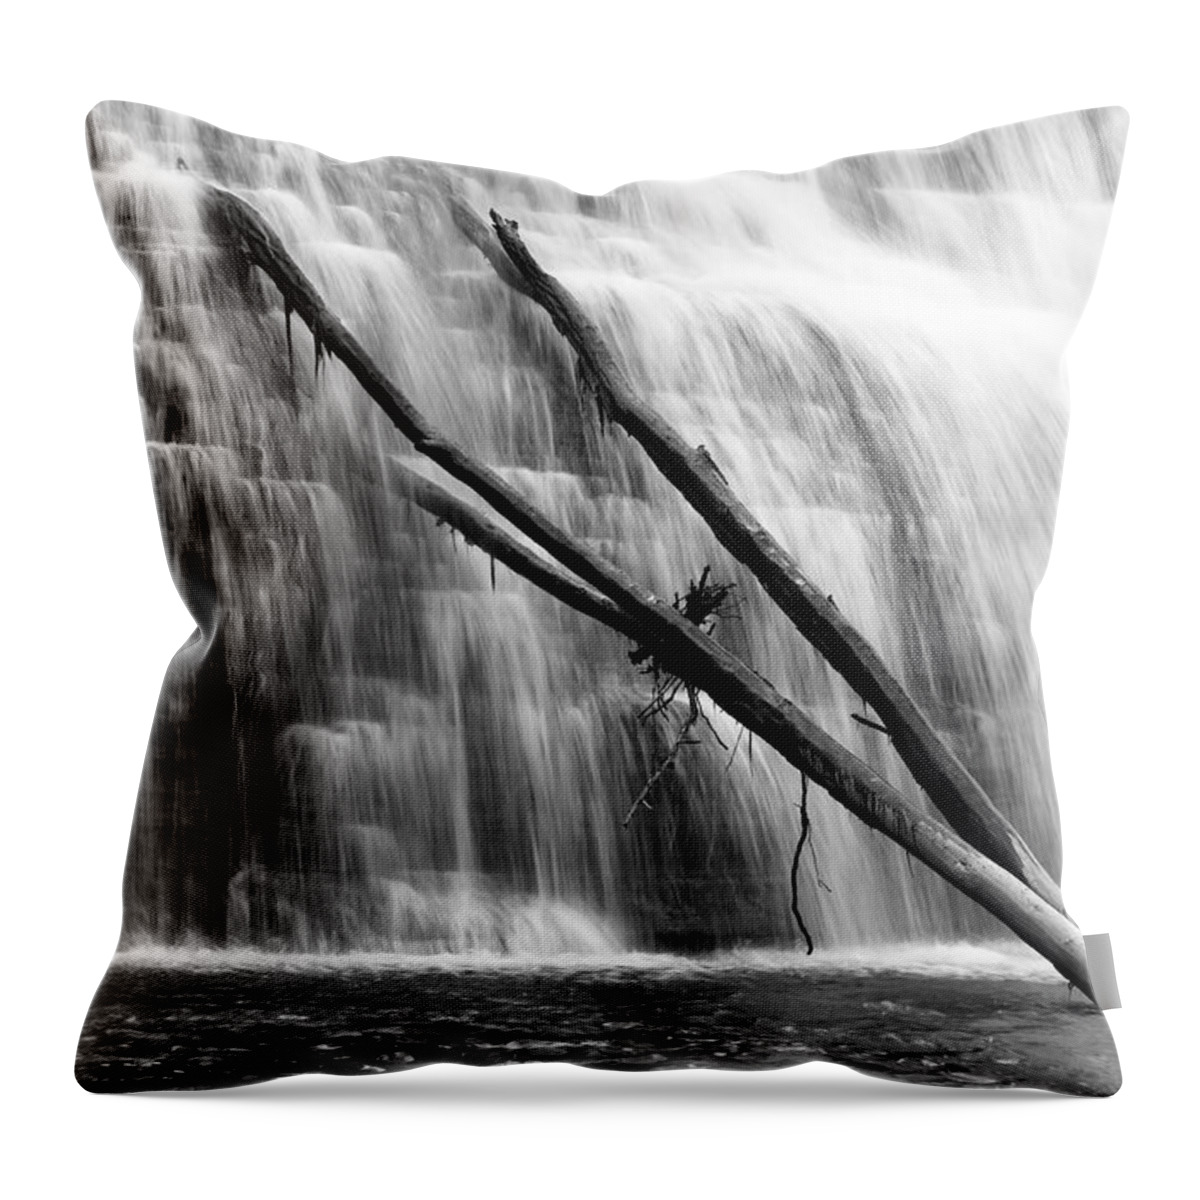 Falls Throw Pillow featuring the photograph Leaning Falls by Robert Och